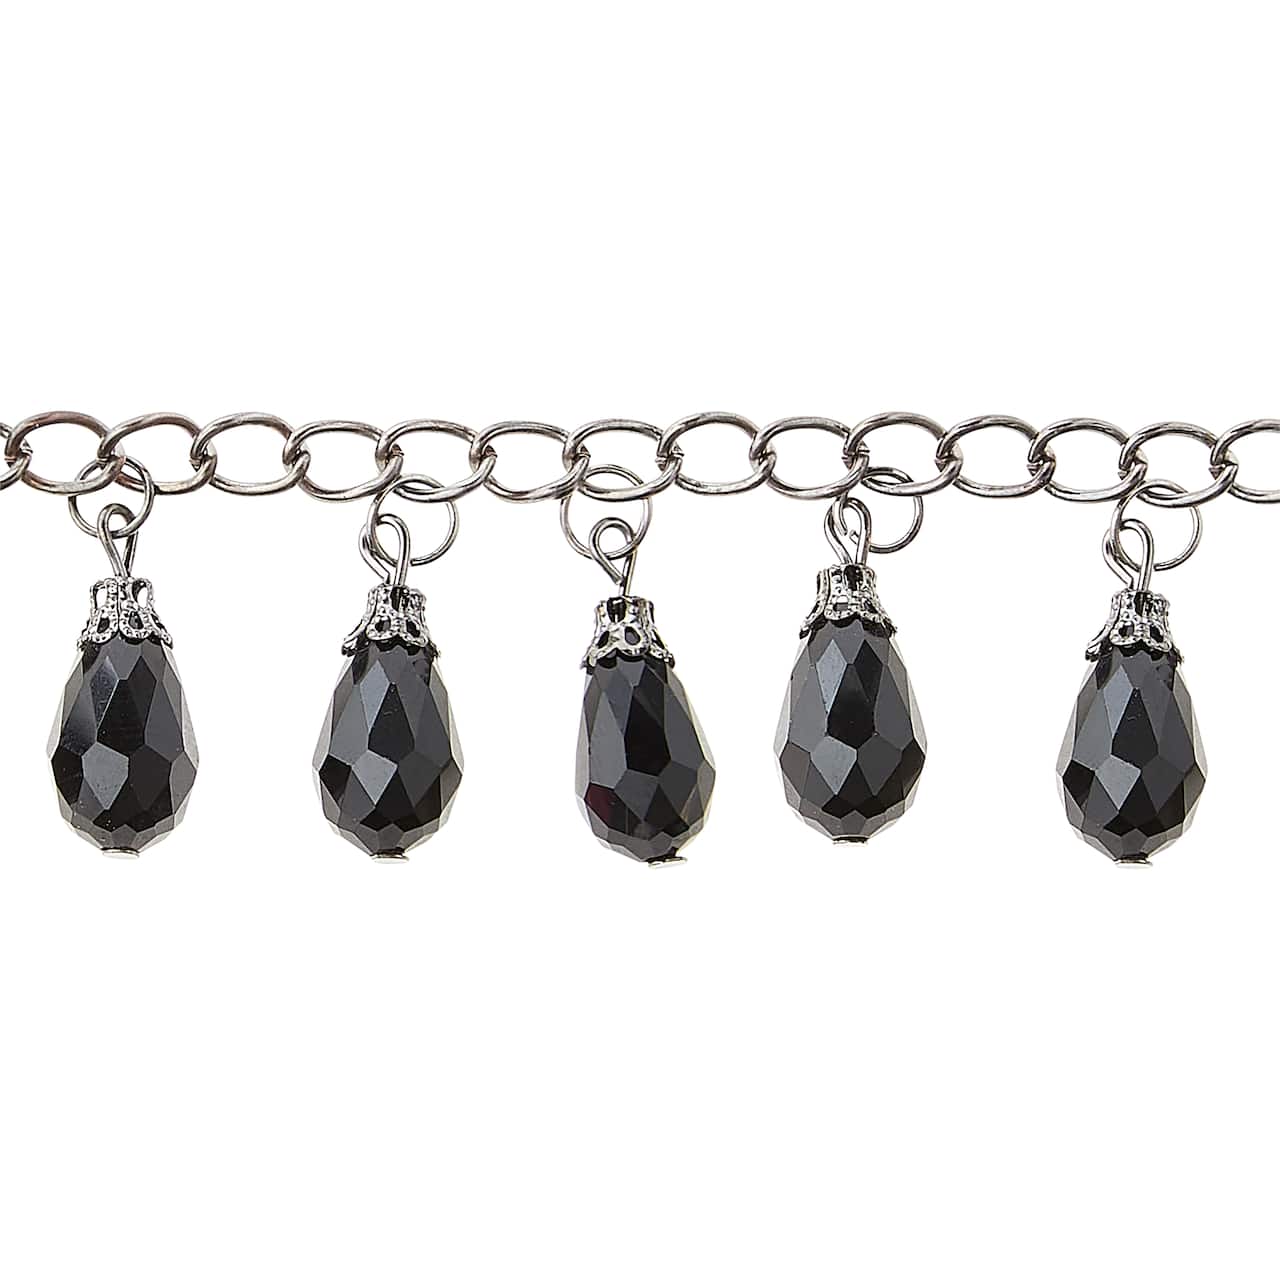 Black Teardrop Glass Beads Chain, 15mm by Bead Landing&#x2122;